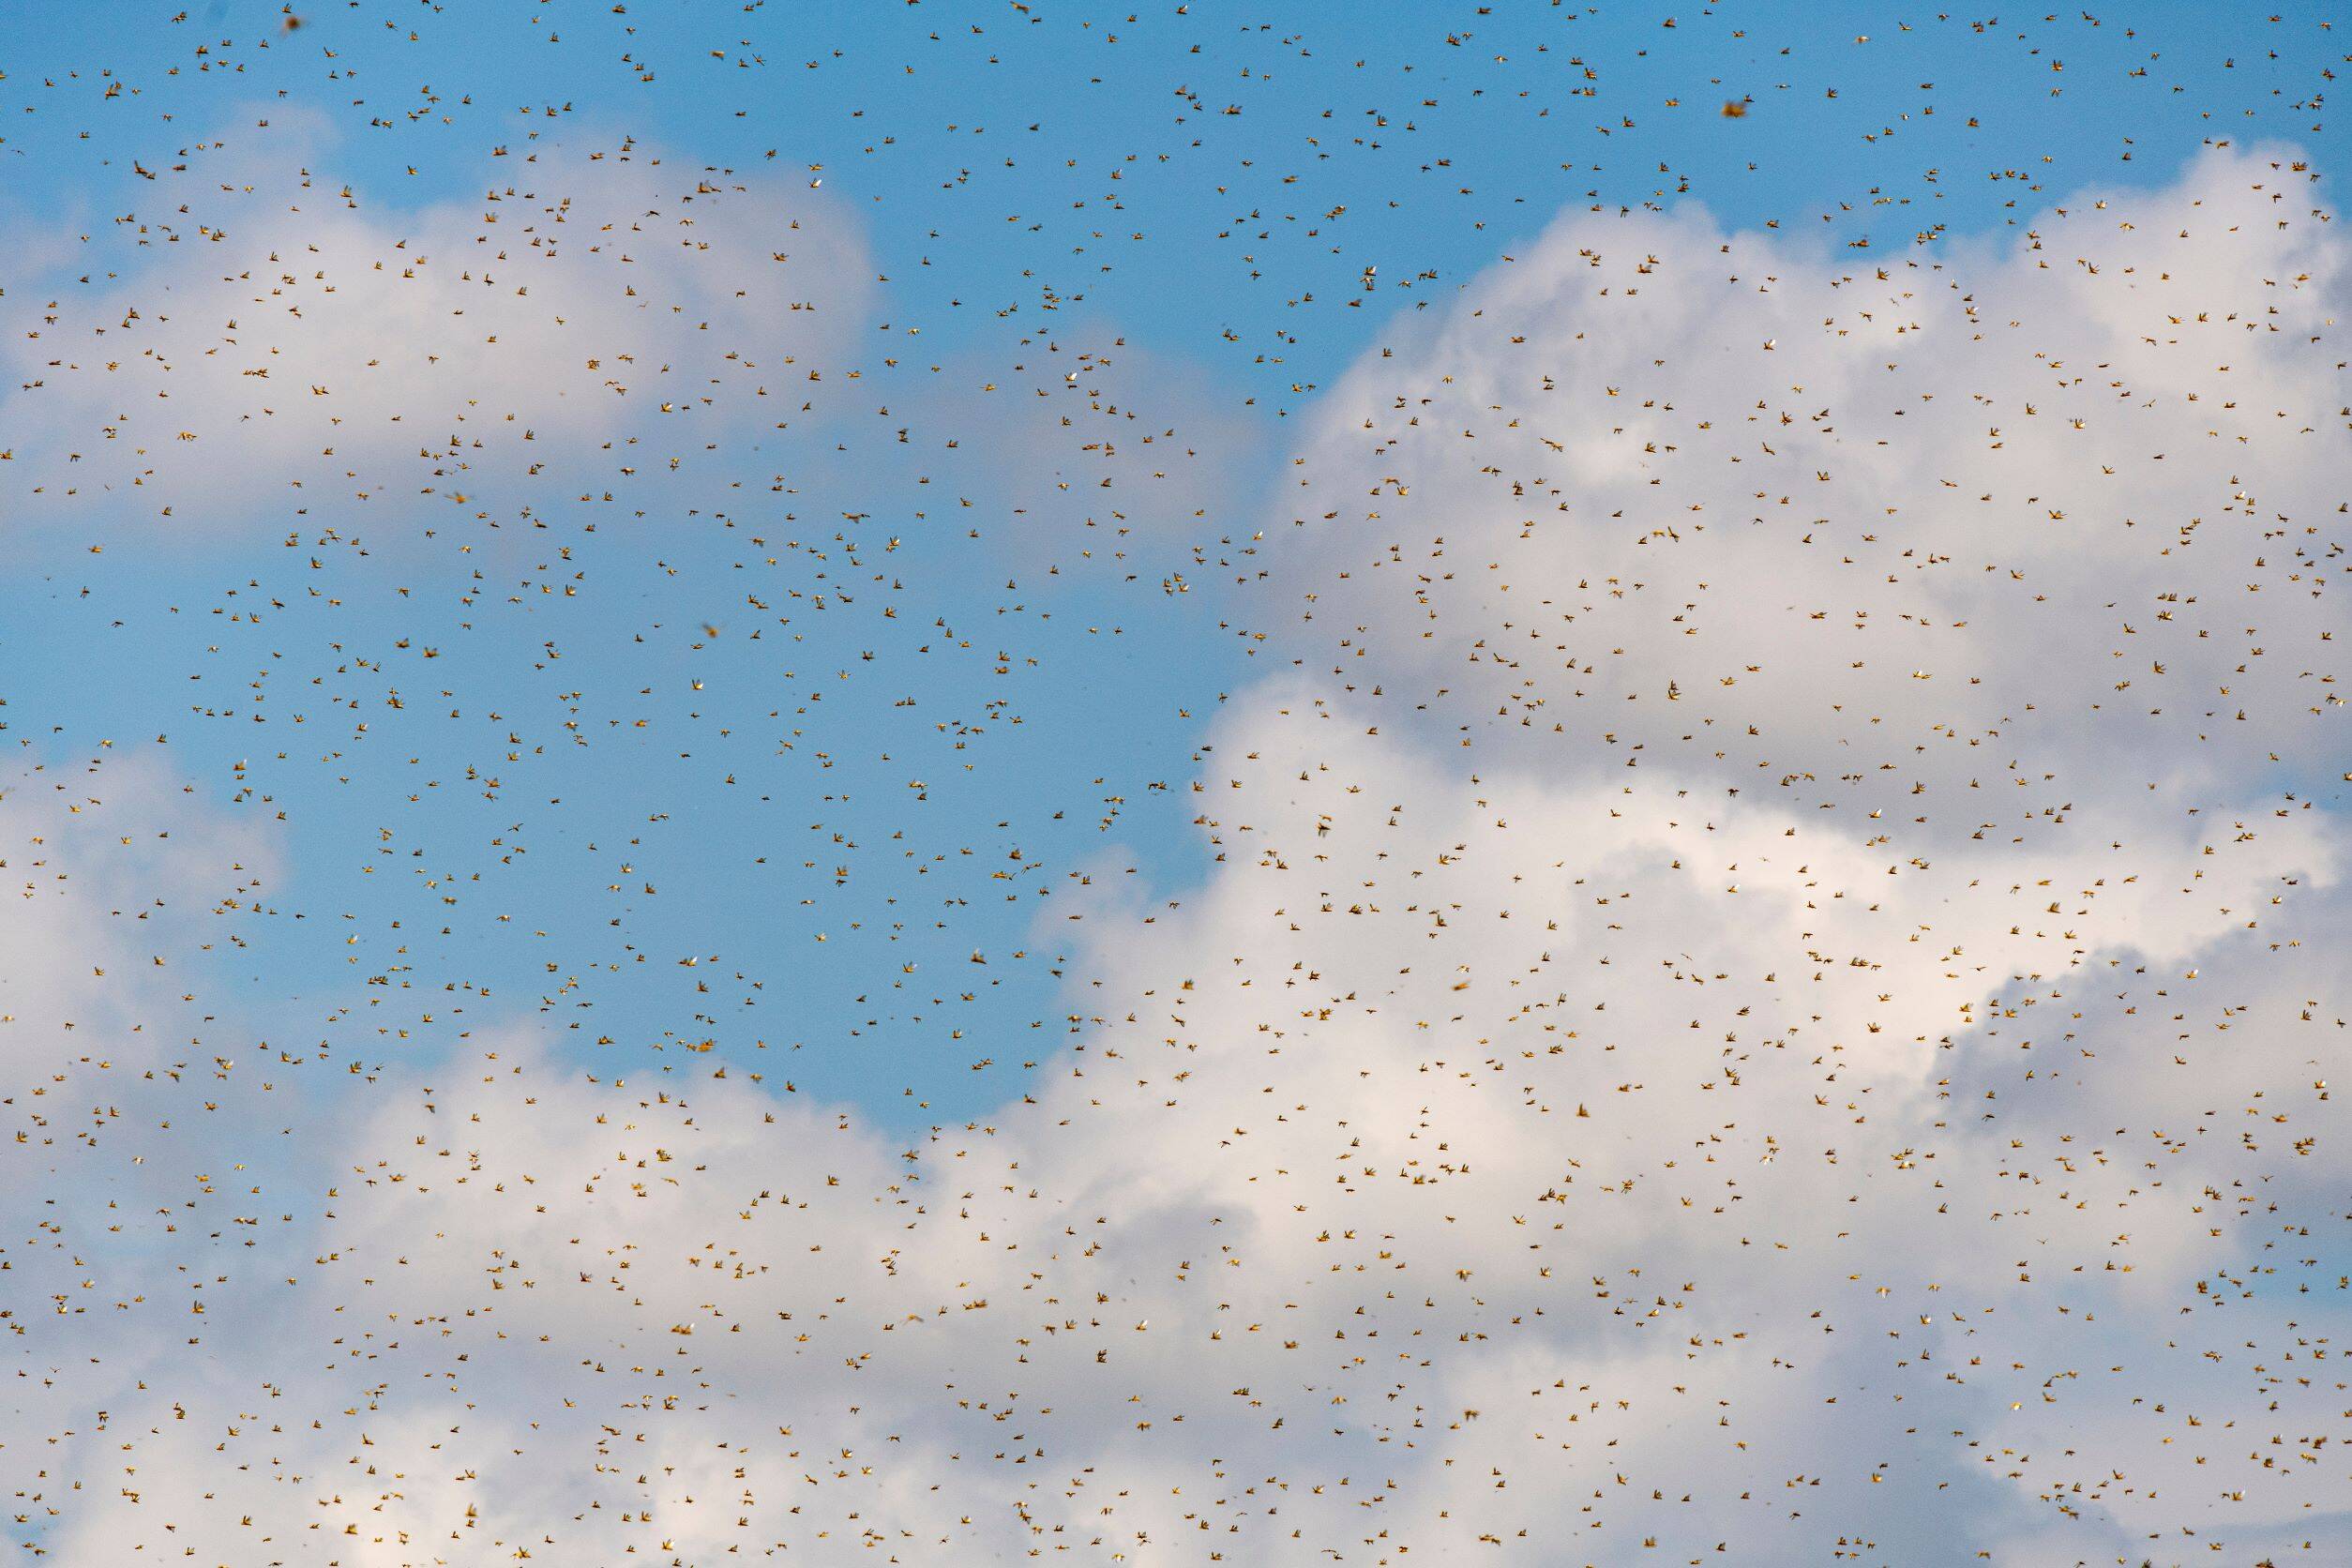 A swarm of desert locusts